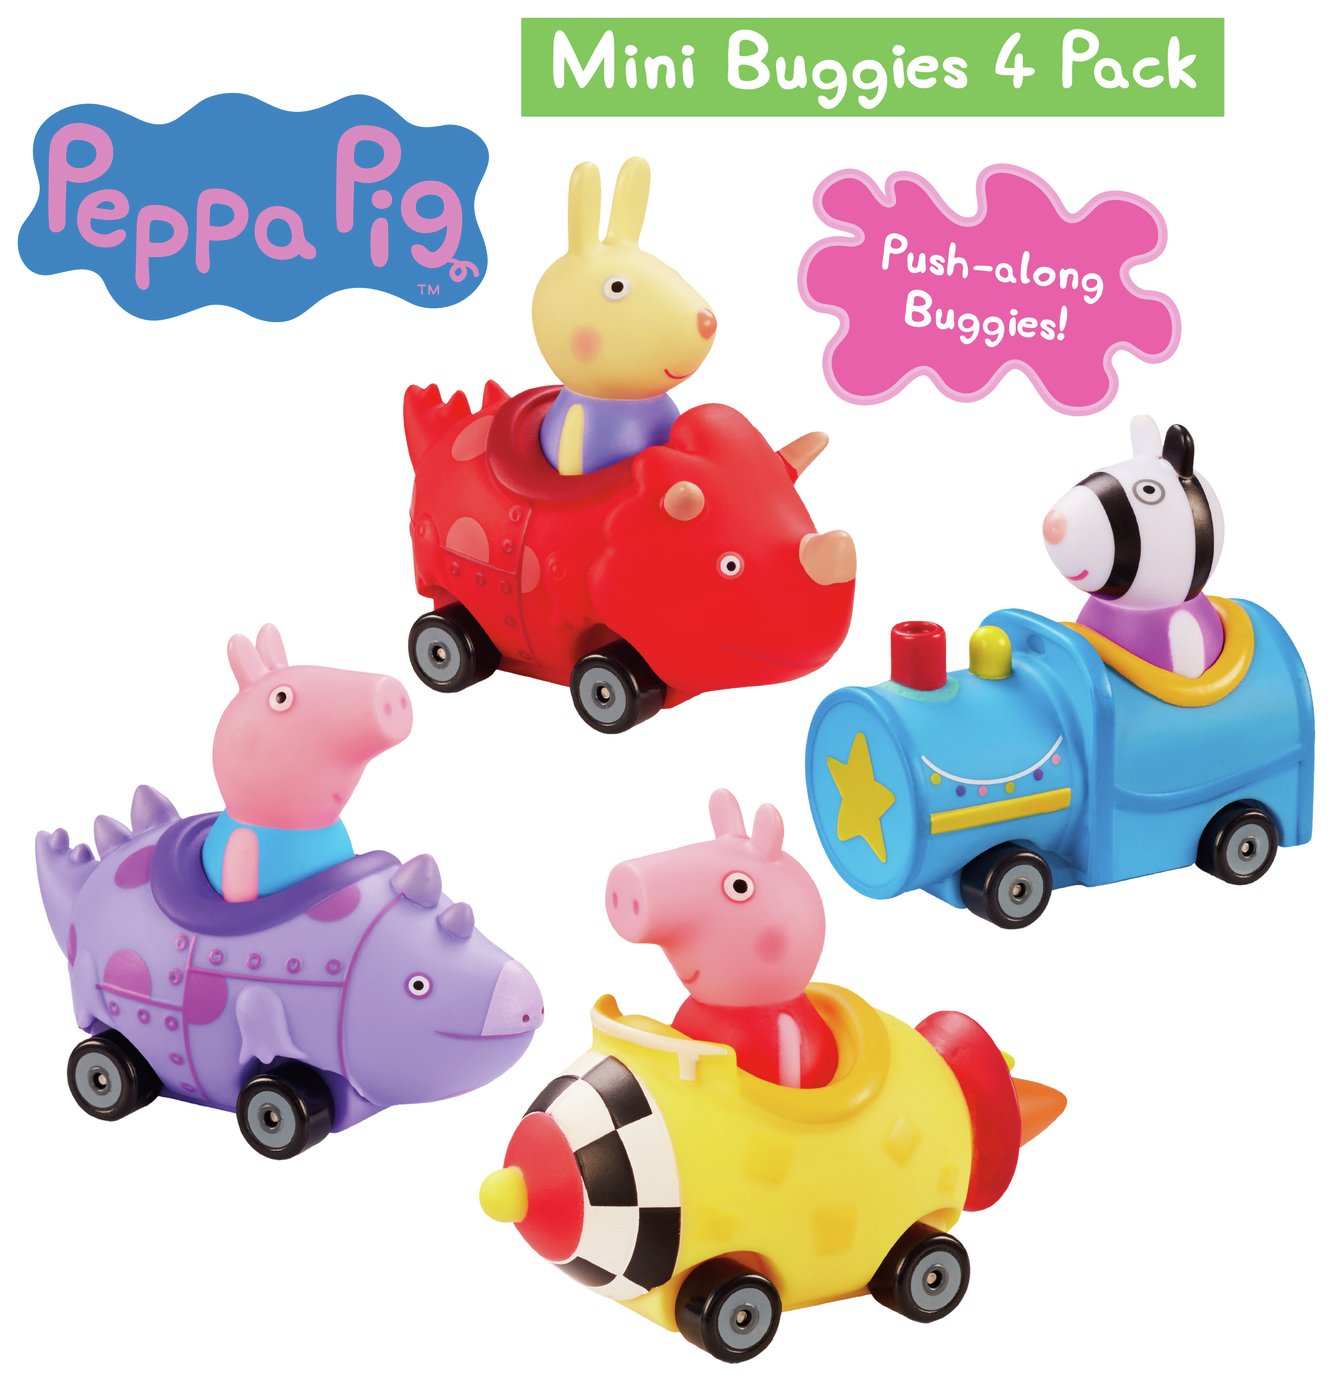 Peppa Pig Mini Buggies - 4 pack